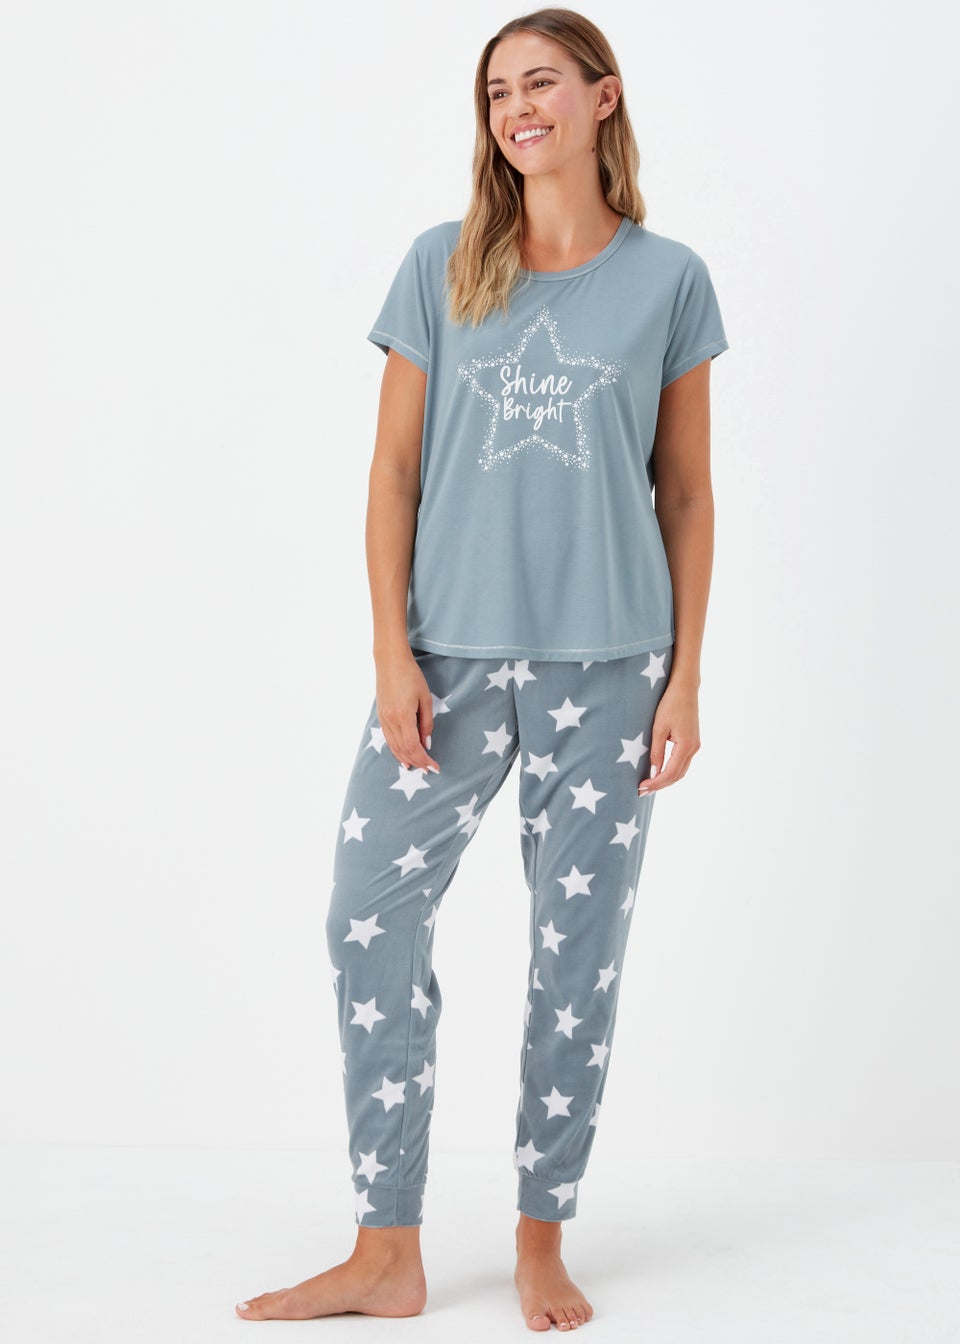 Aqua Shine Bright Fleece Pyjama Set